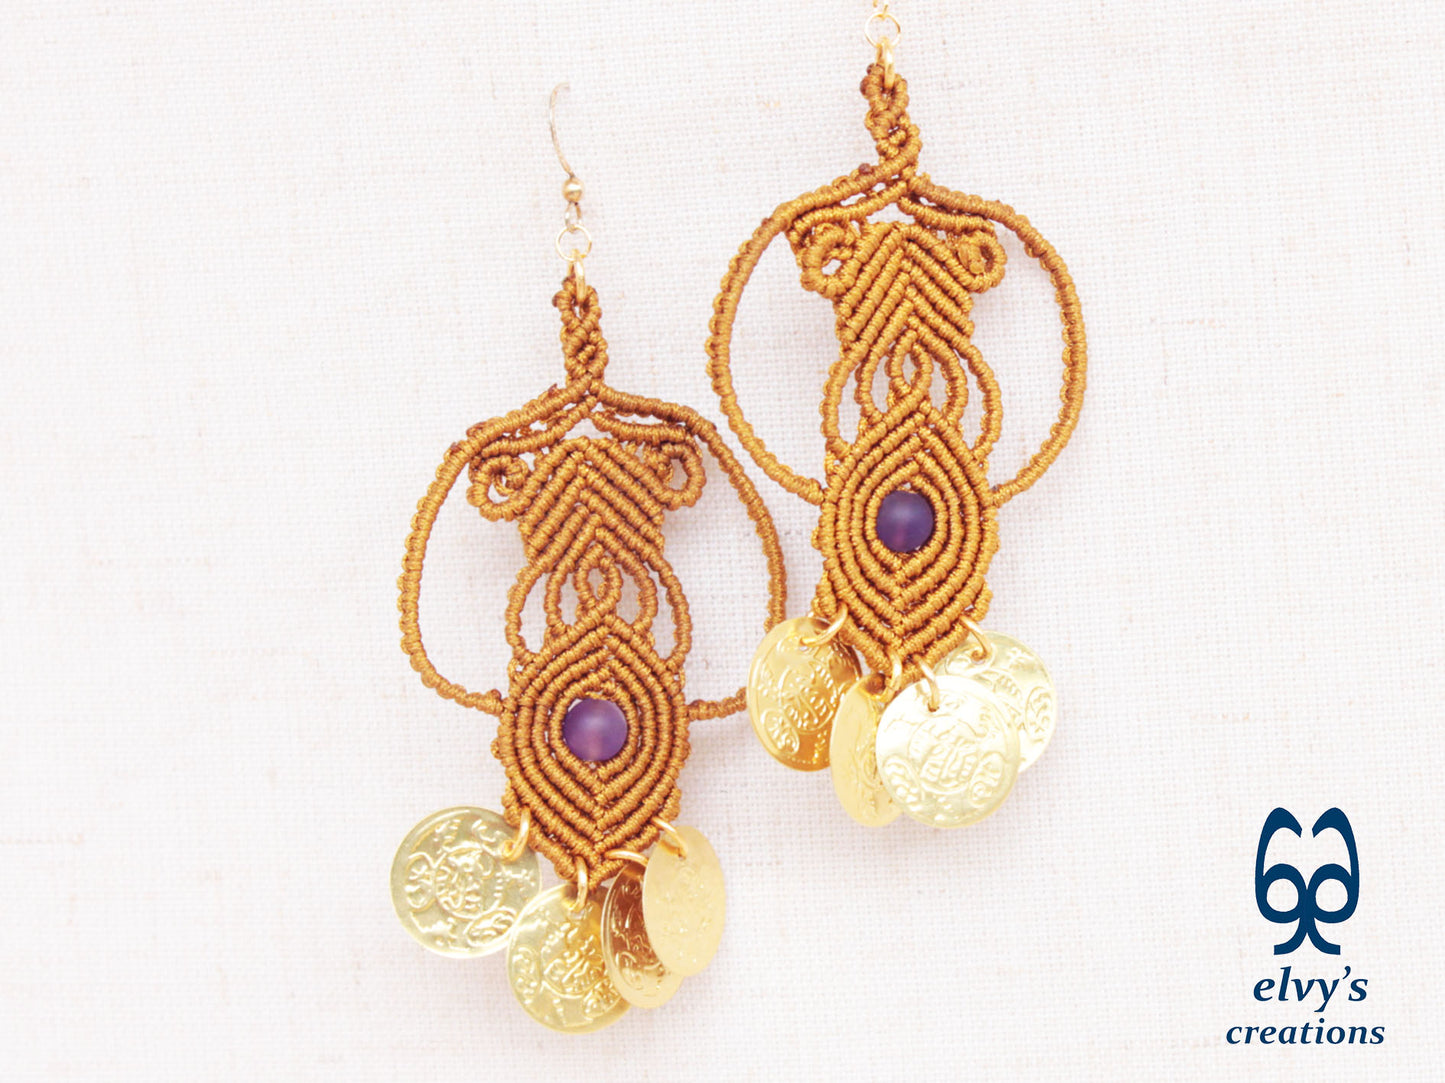 Gold Handmade Purple Macrame Earrings Long Dangle with Amethyst Gemstones, Χρυσά Μακραμέ Σκουλαρίκια με Φλουριά